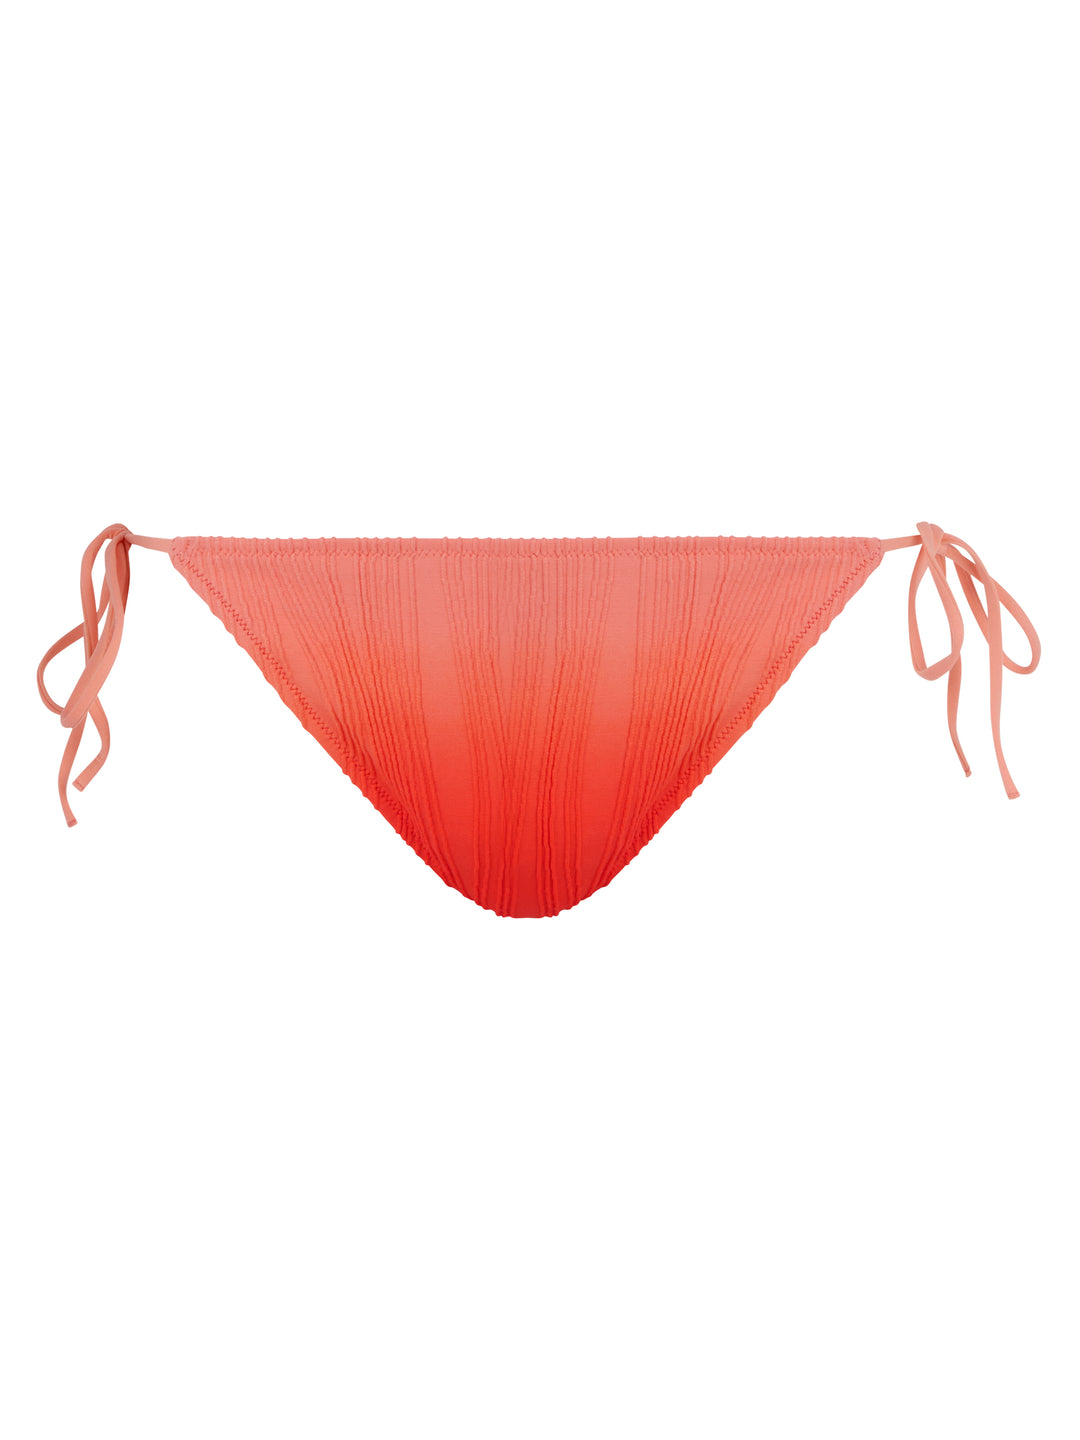 Chantelle Swimwear - Swim One Size Bikini Orange tie & dye